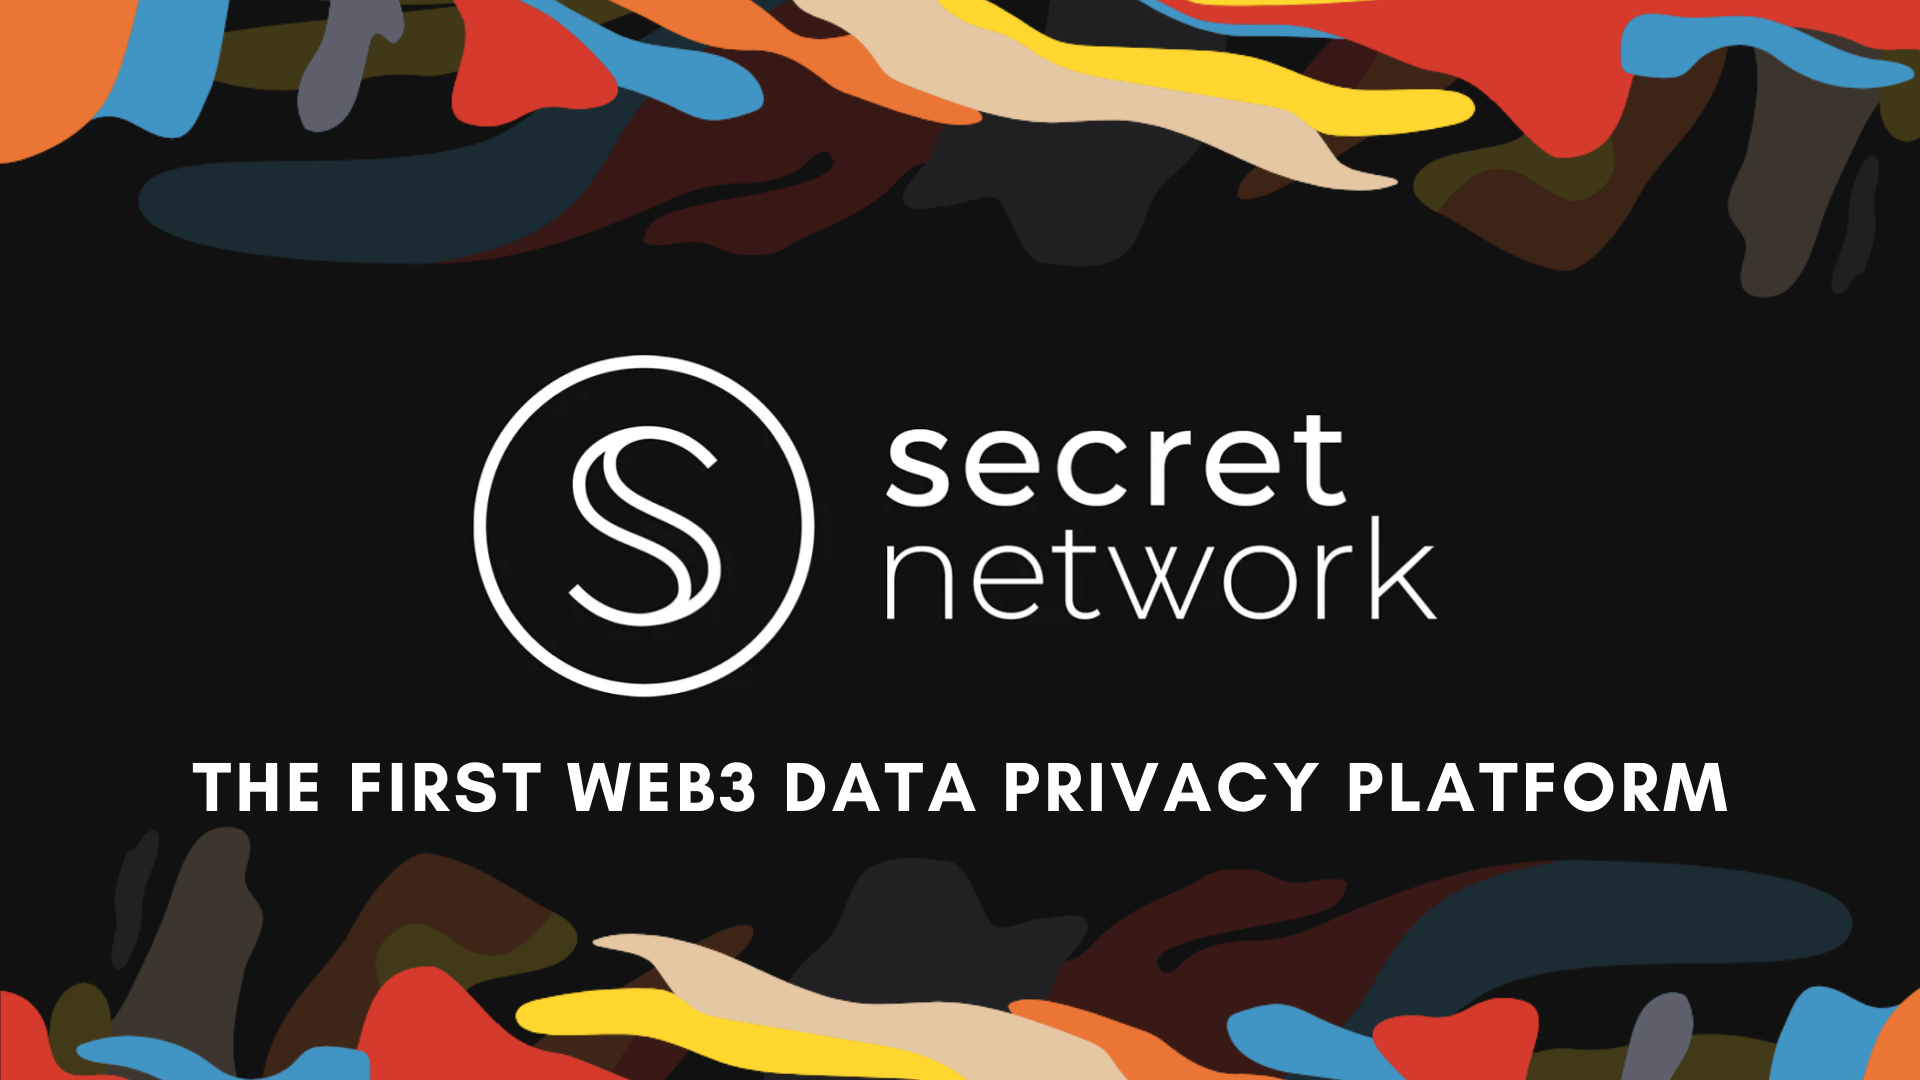 sThe first web3 data privacy platform